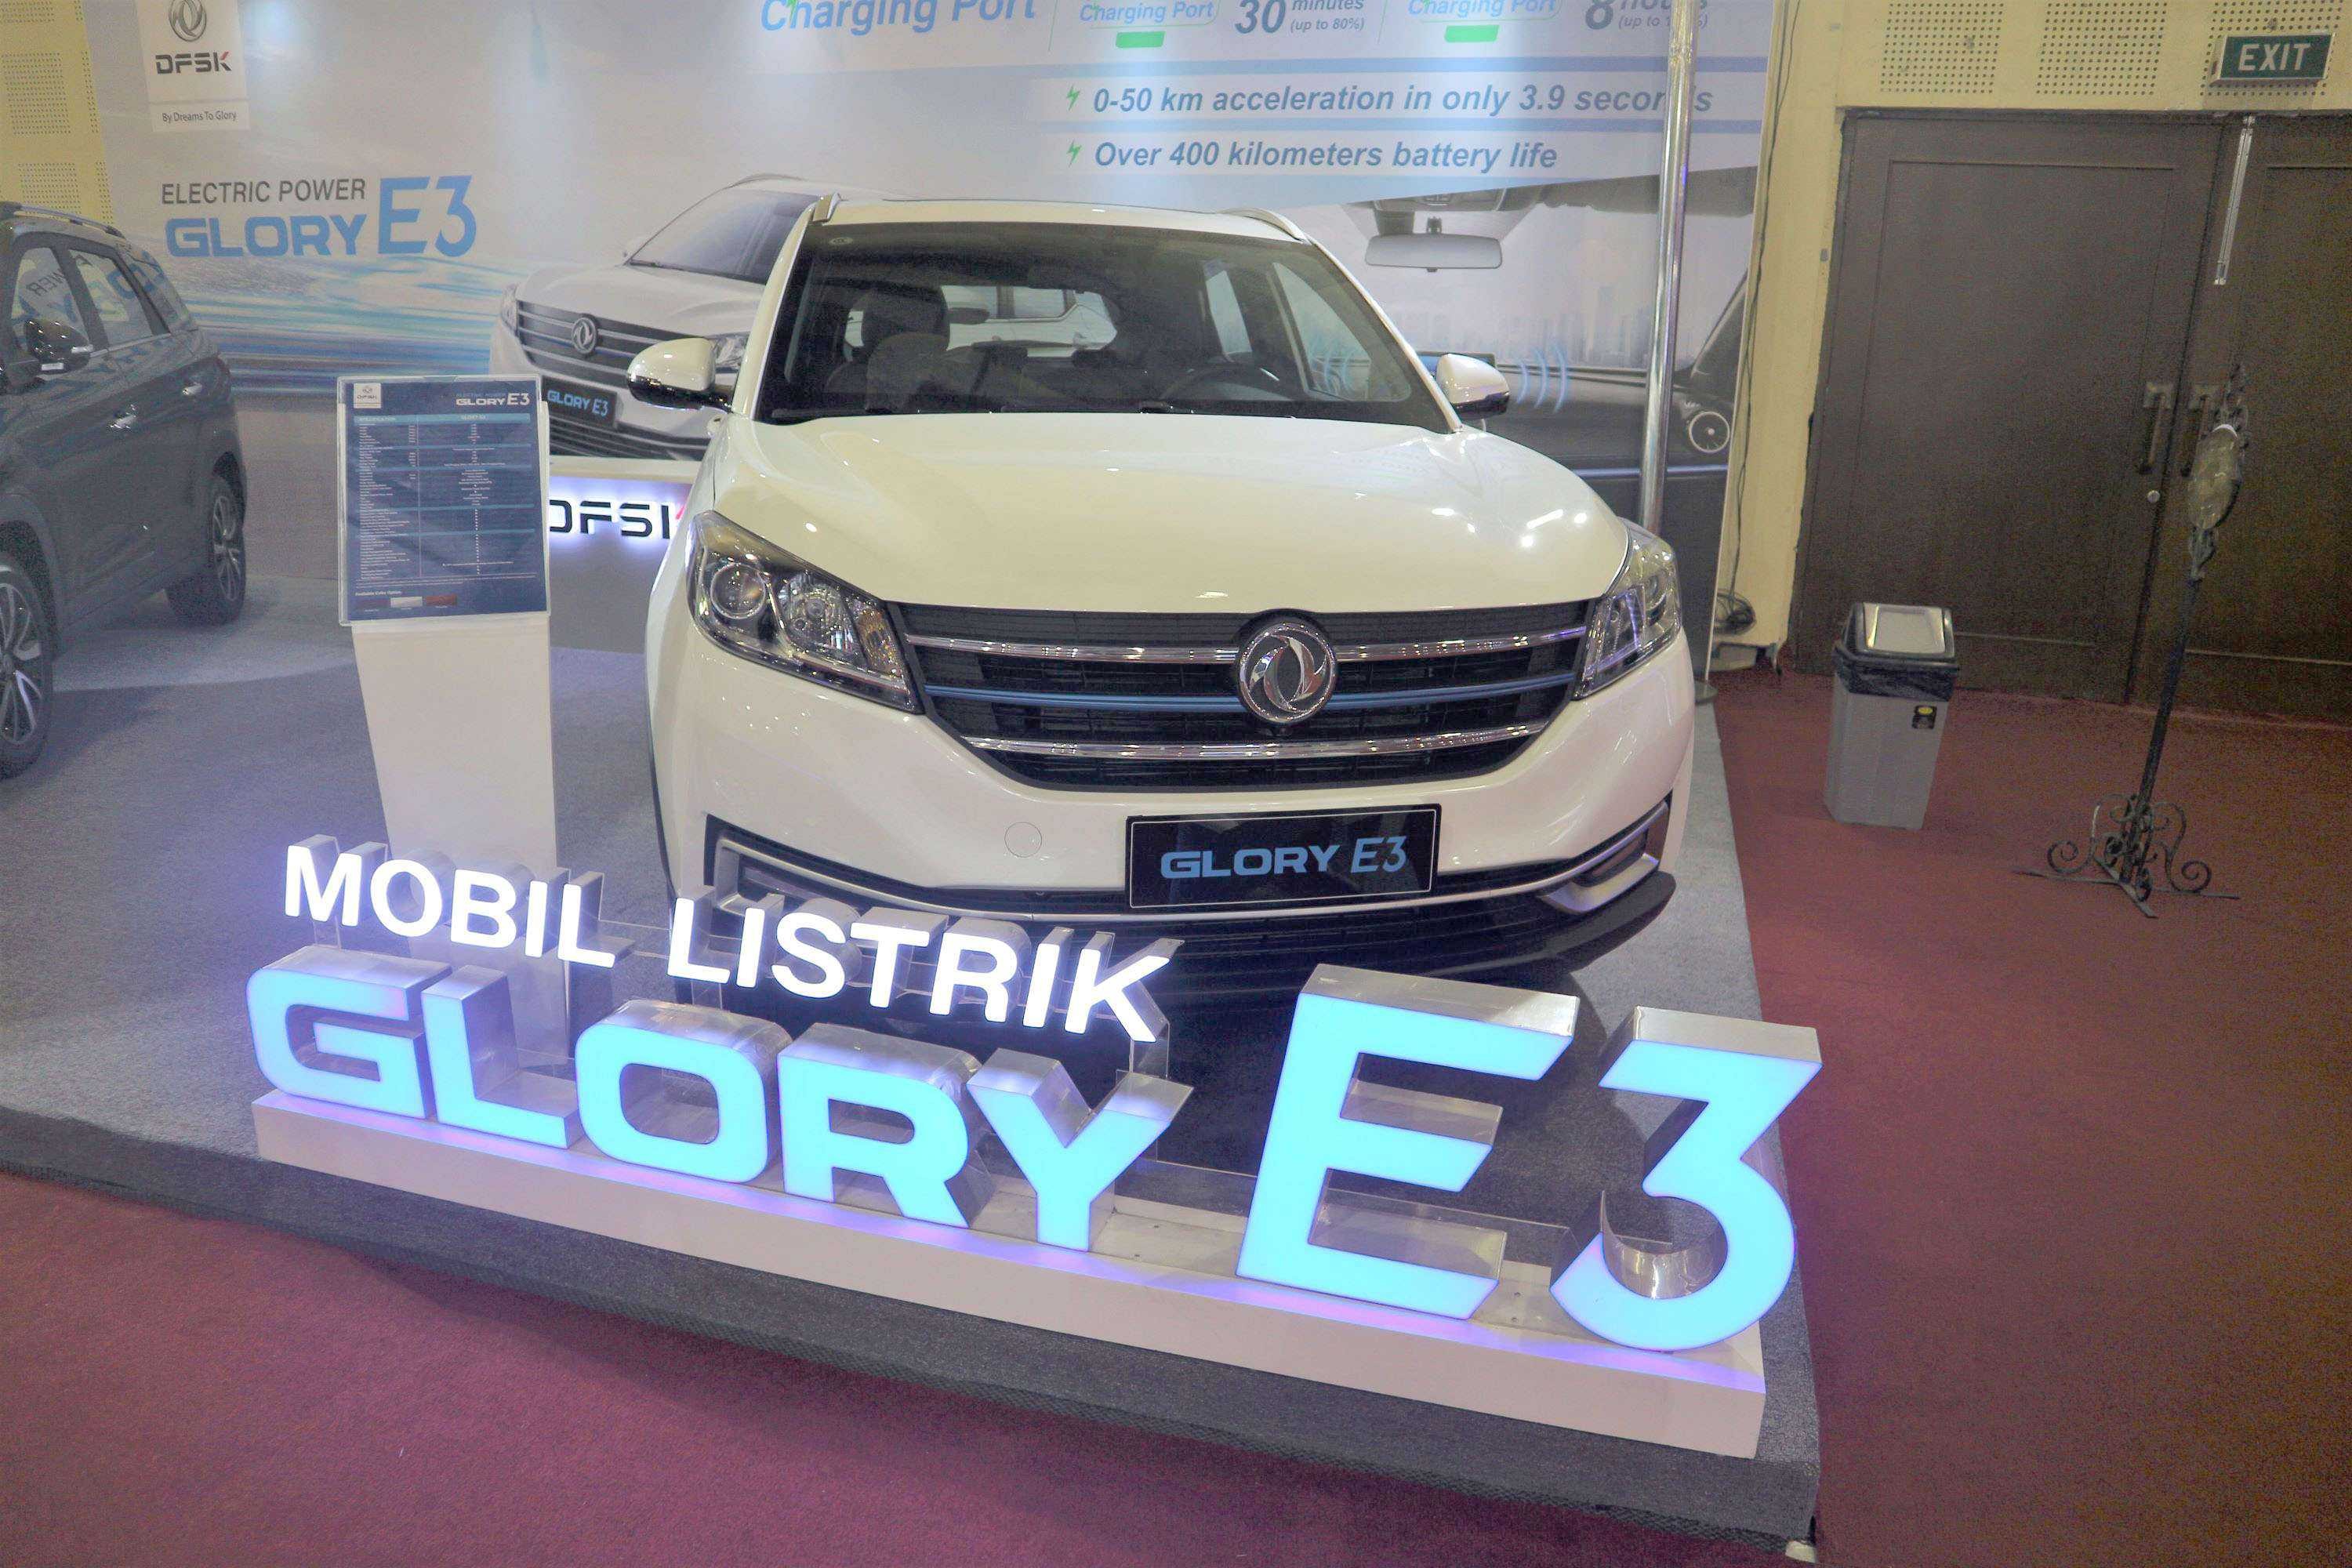 DFSK Ikut Serta di Indonesia Electric Motor Show 2019